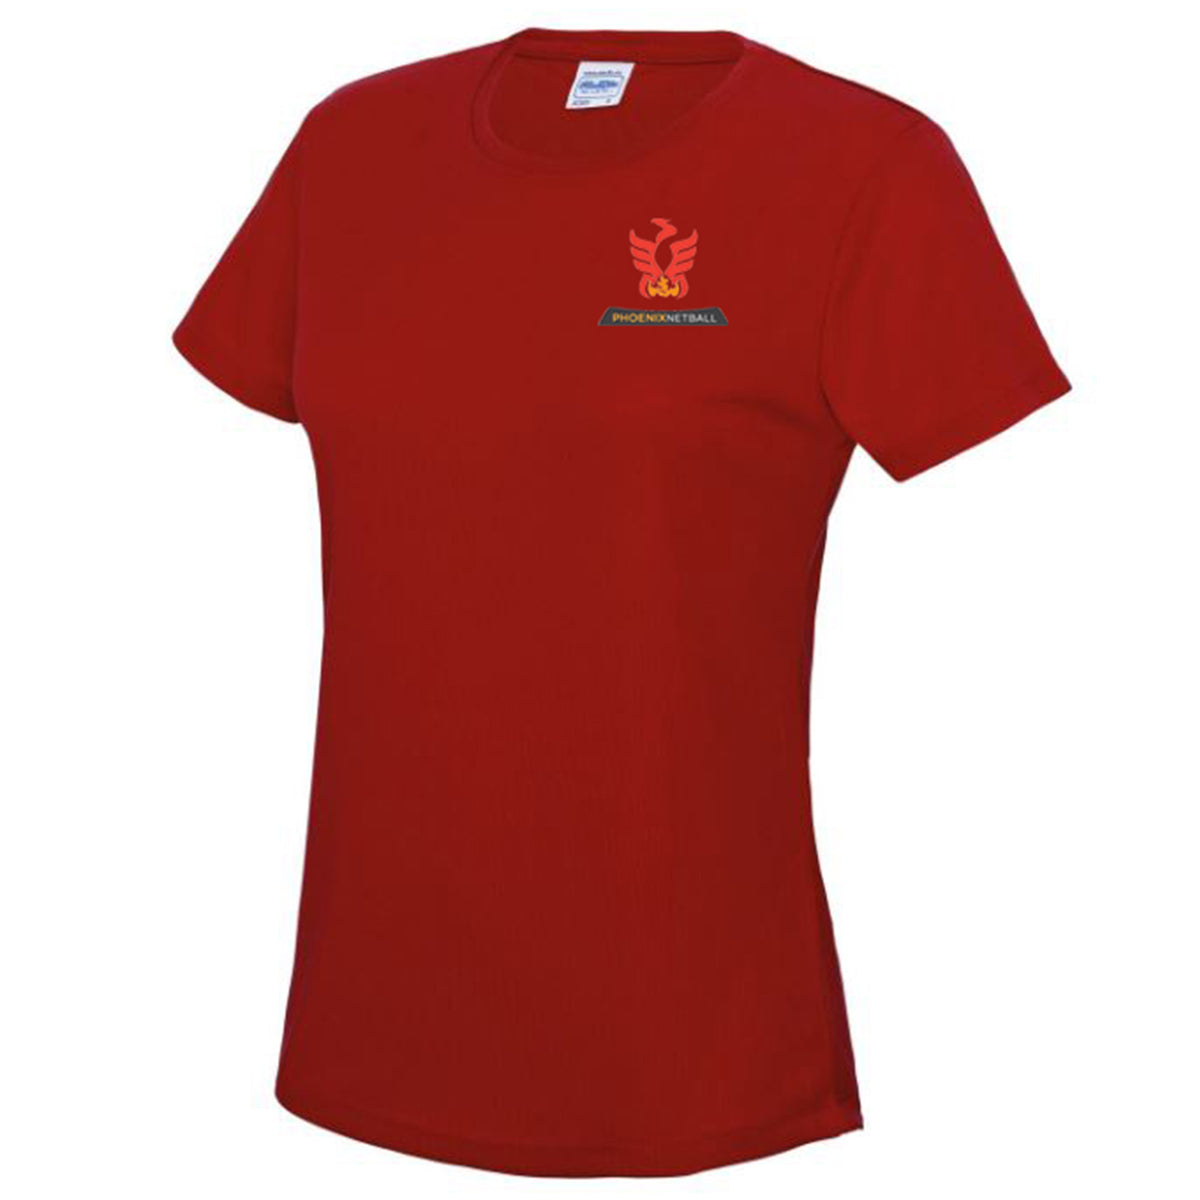 Phoenix Netball T Shirt: Red